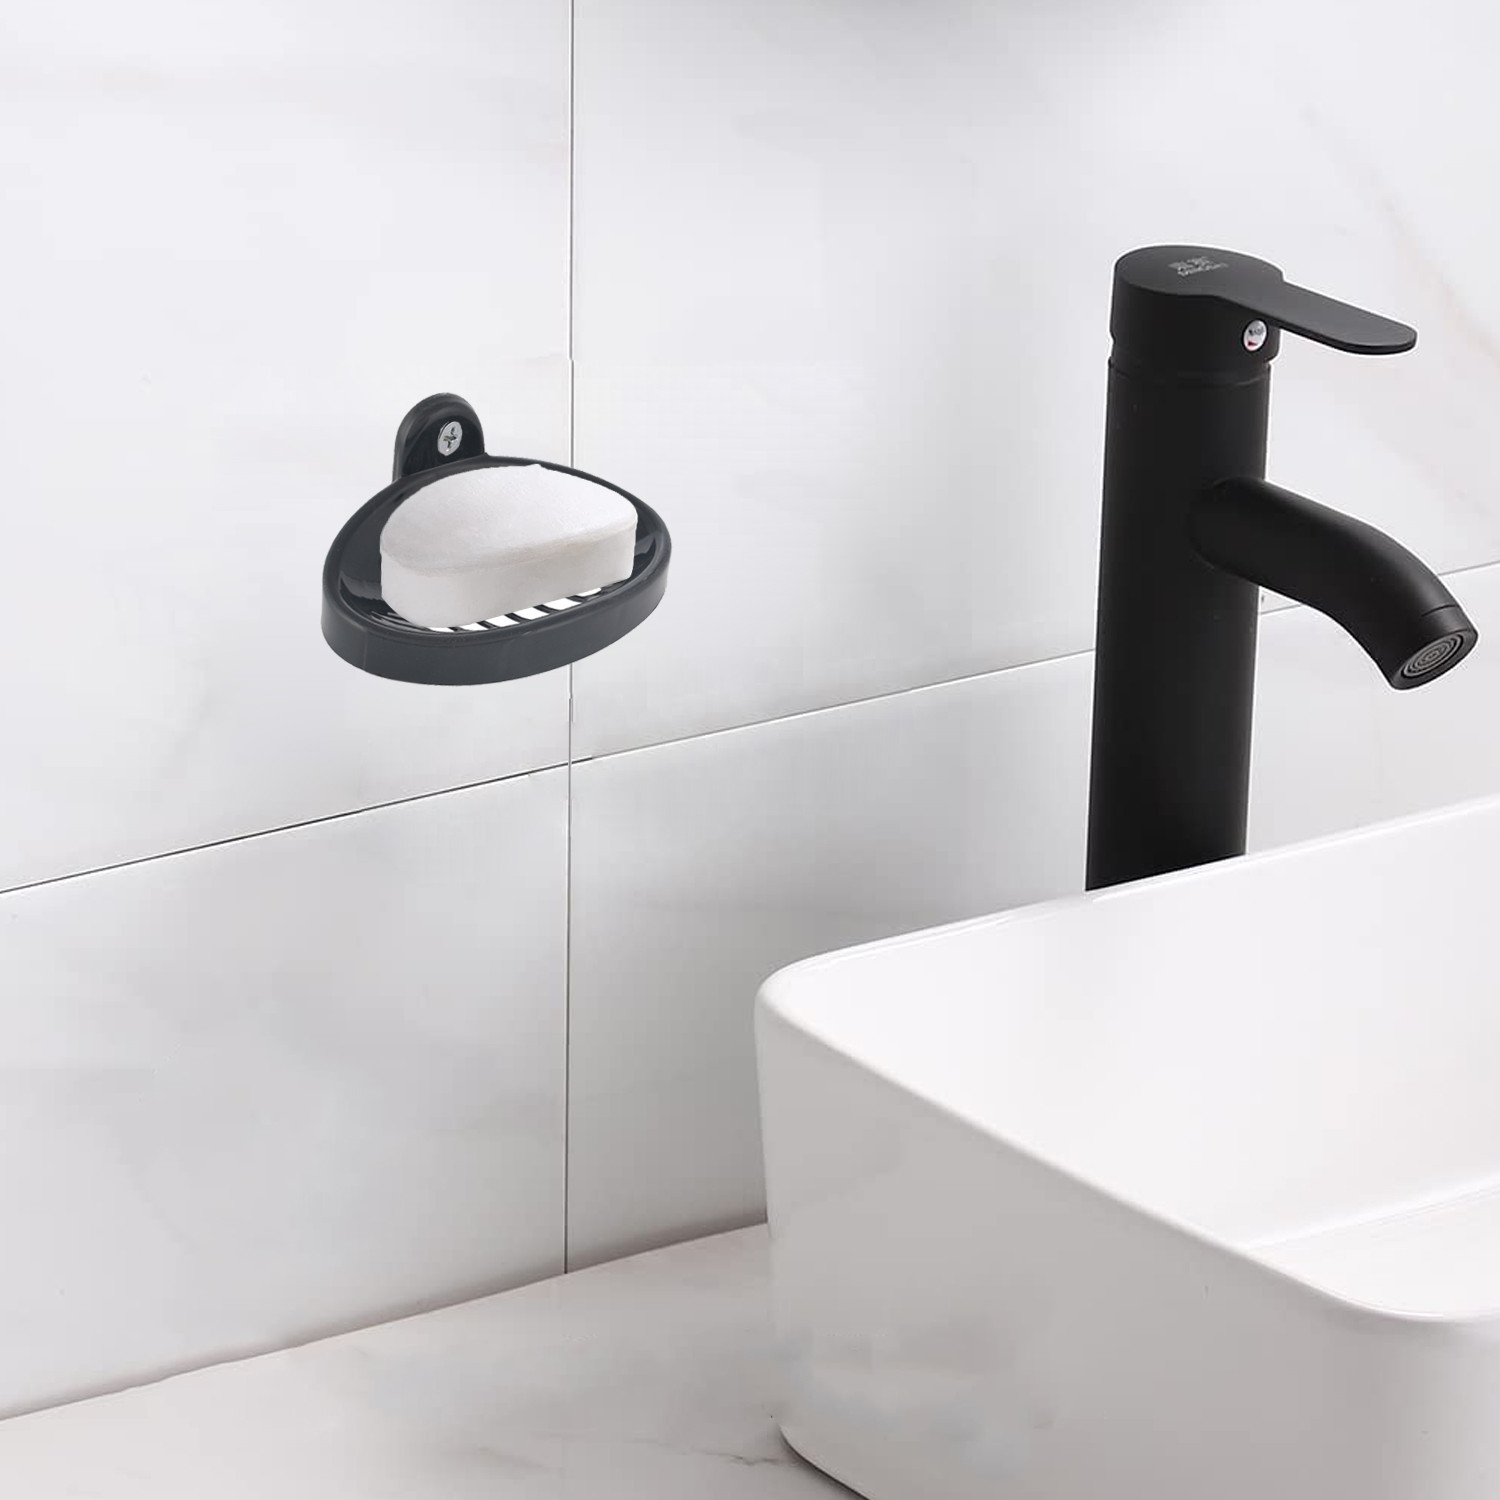 Kuber Industries Soap Holder|Sink Soap Holder|Plastic wall Mounted Soap Holder|Oval Shape Self Draining Soap Dish for Bathroom| (Grey)